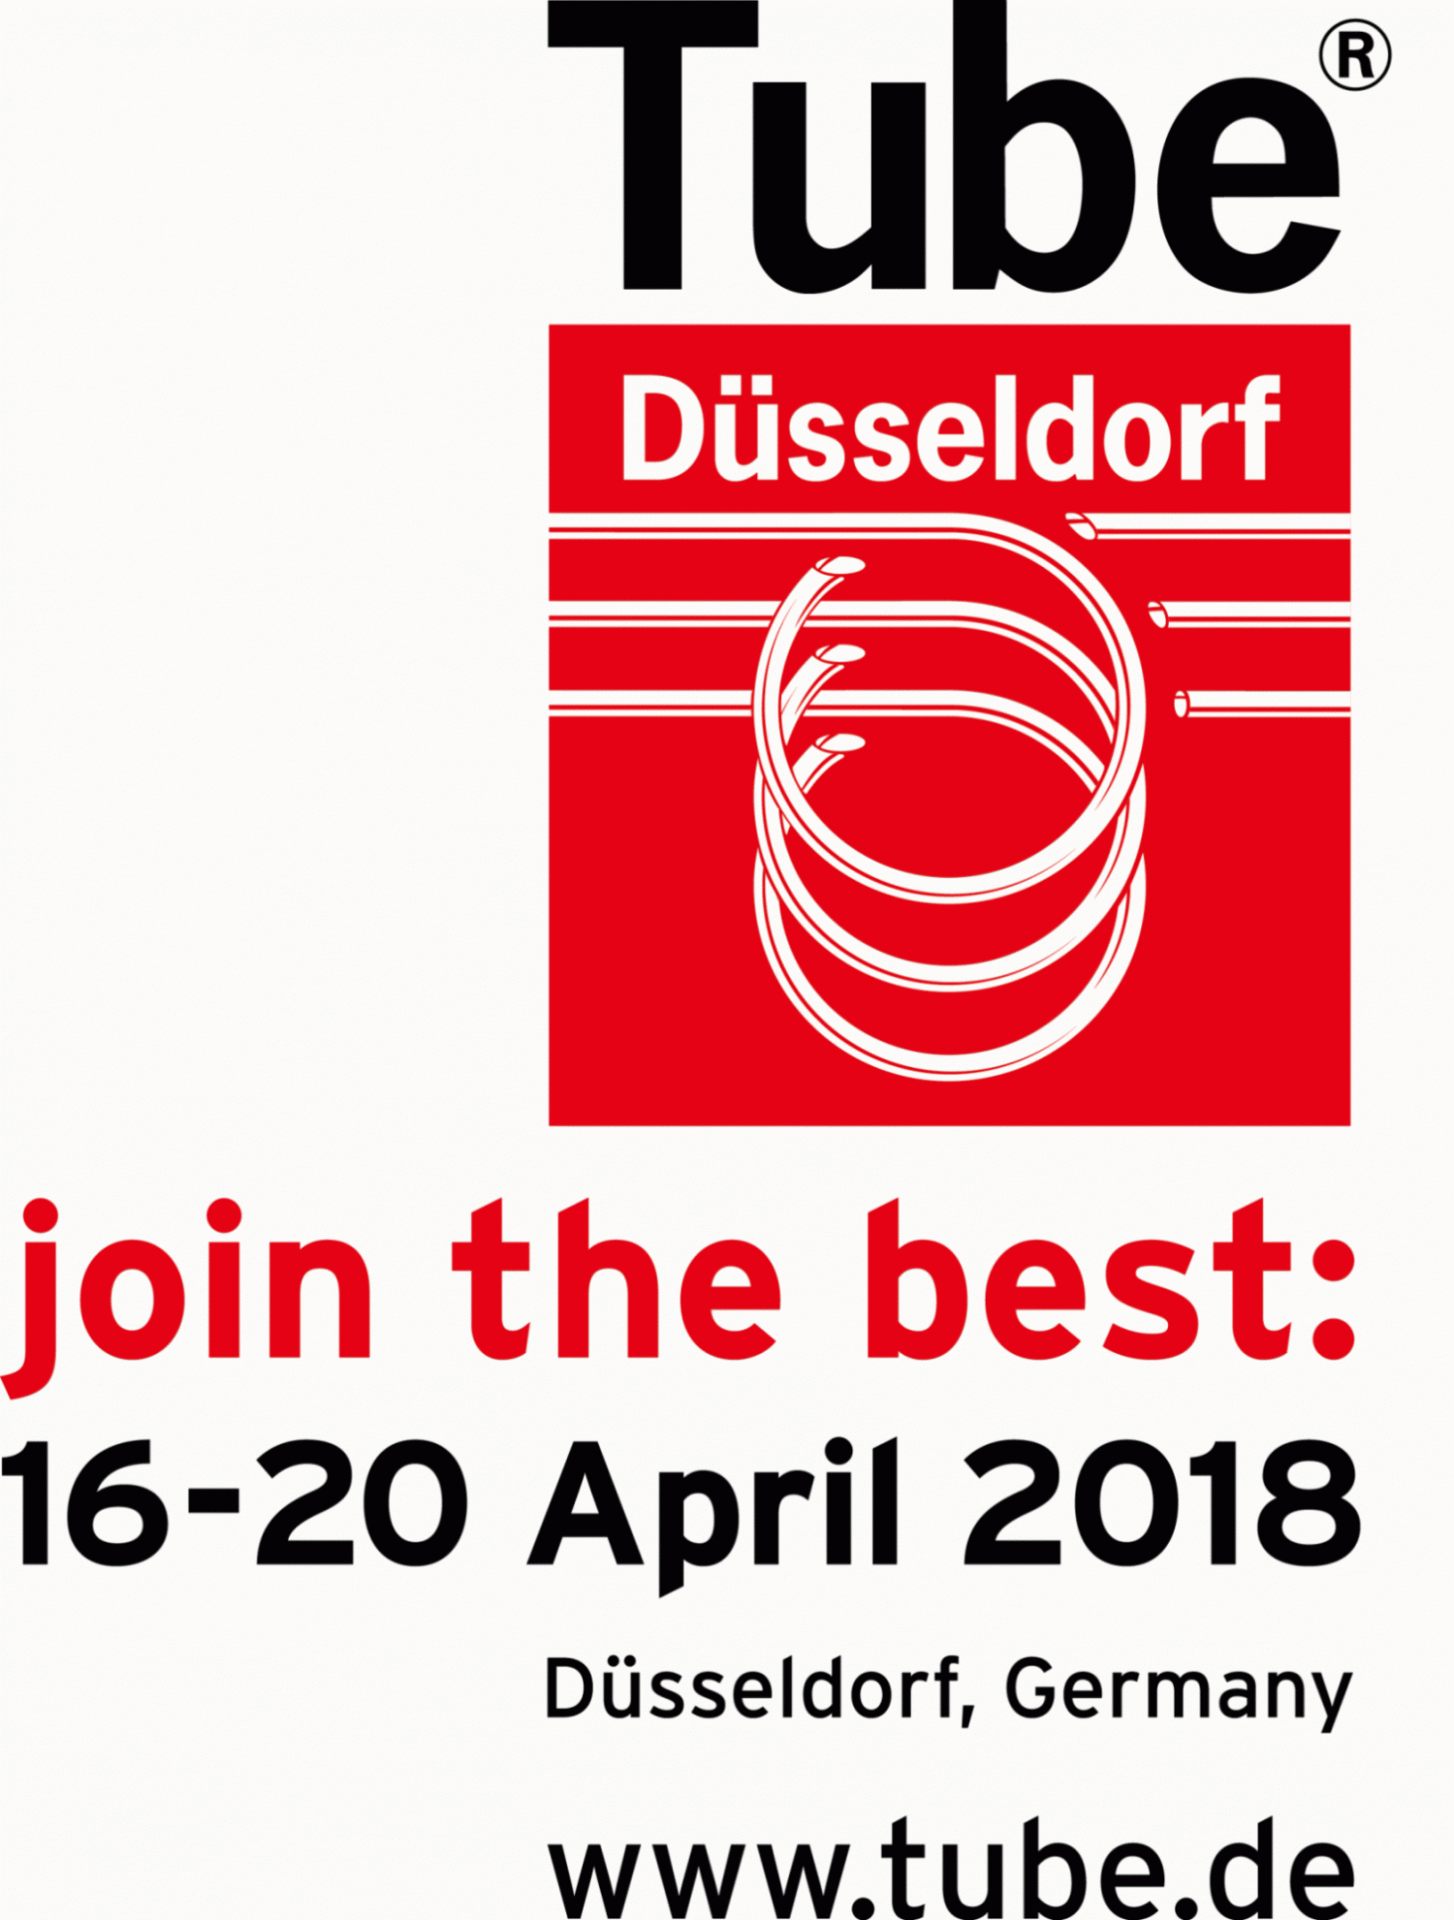 Messe tube Düsseldorf 16-20 April 2018